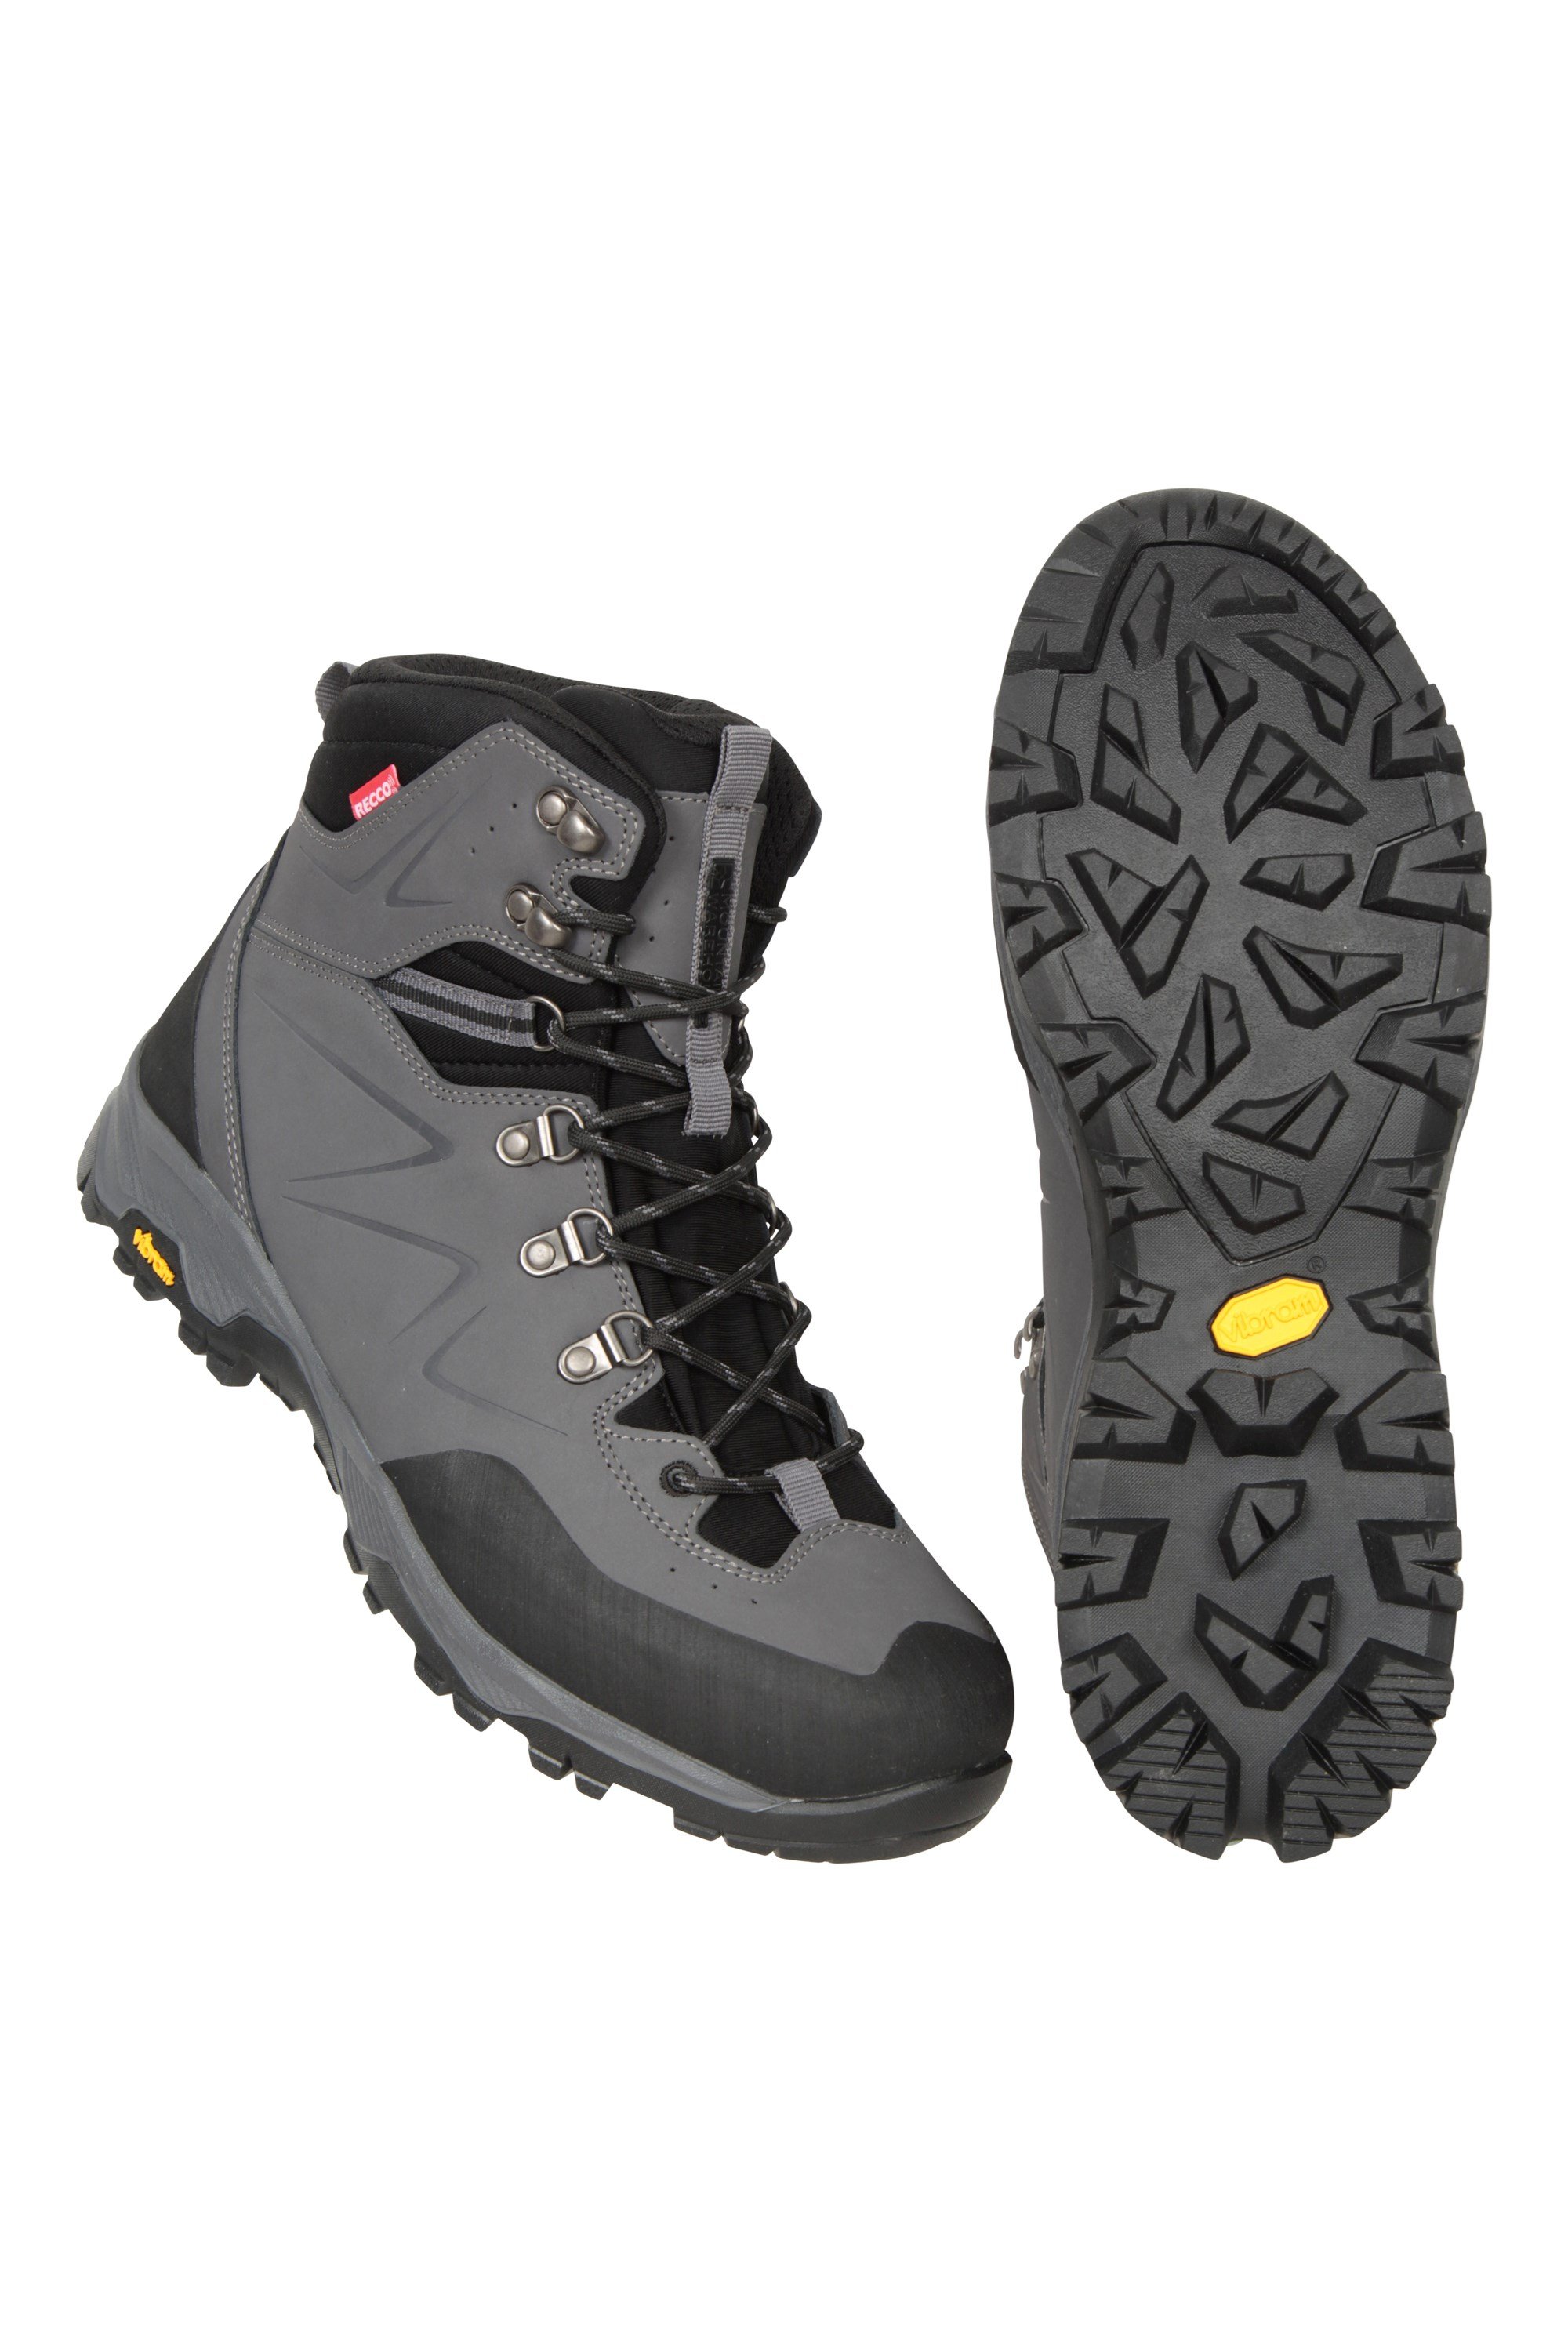 Ultra Pike Mens Vibram Recco Waterproof Boots - Grey